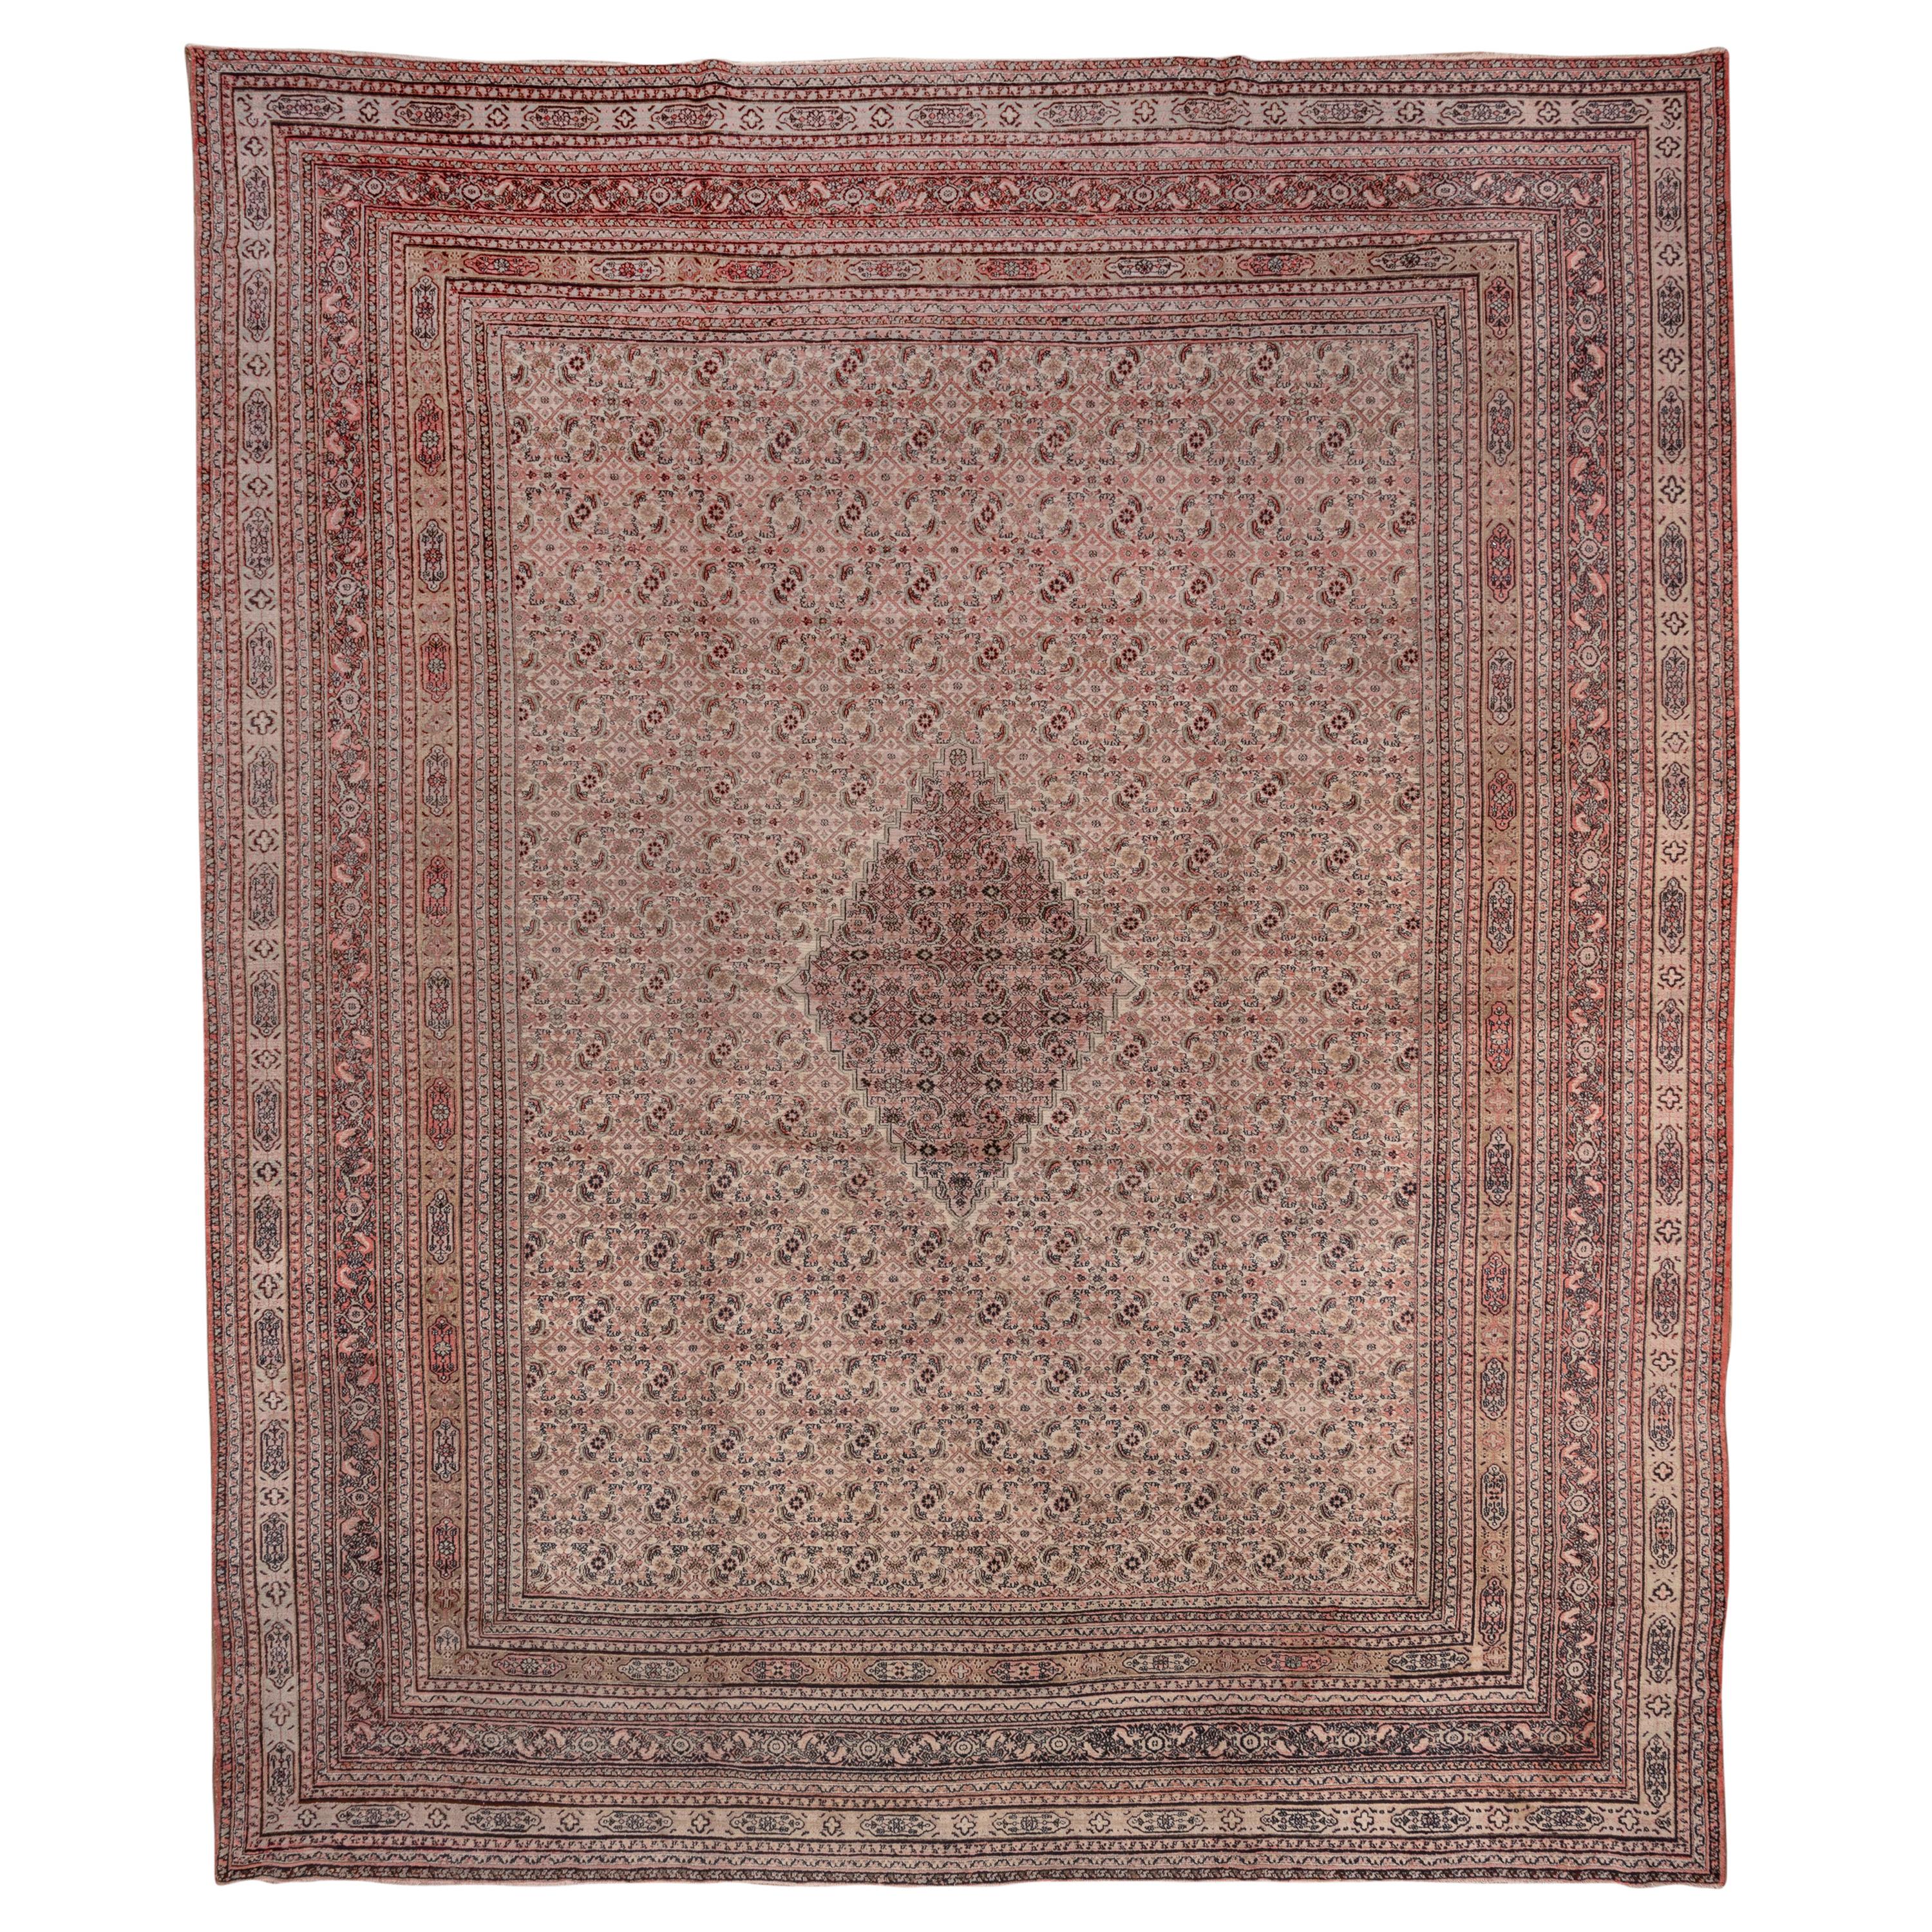 Fine Antique Persian Khorassan Mansion Carpet, circa 1900s